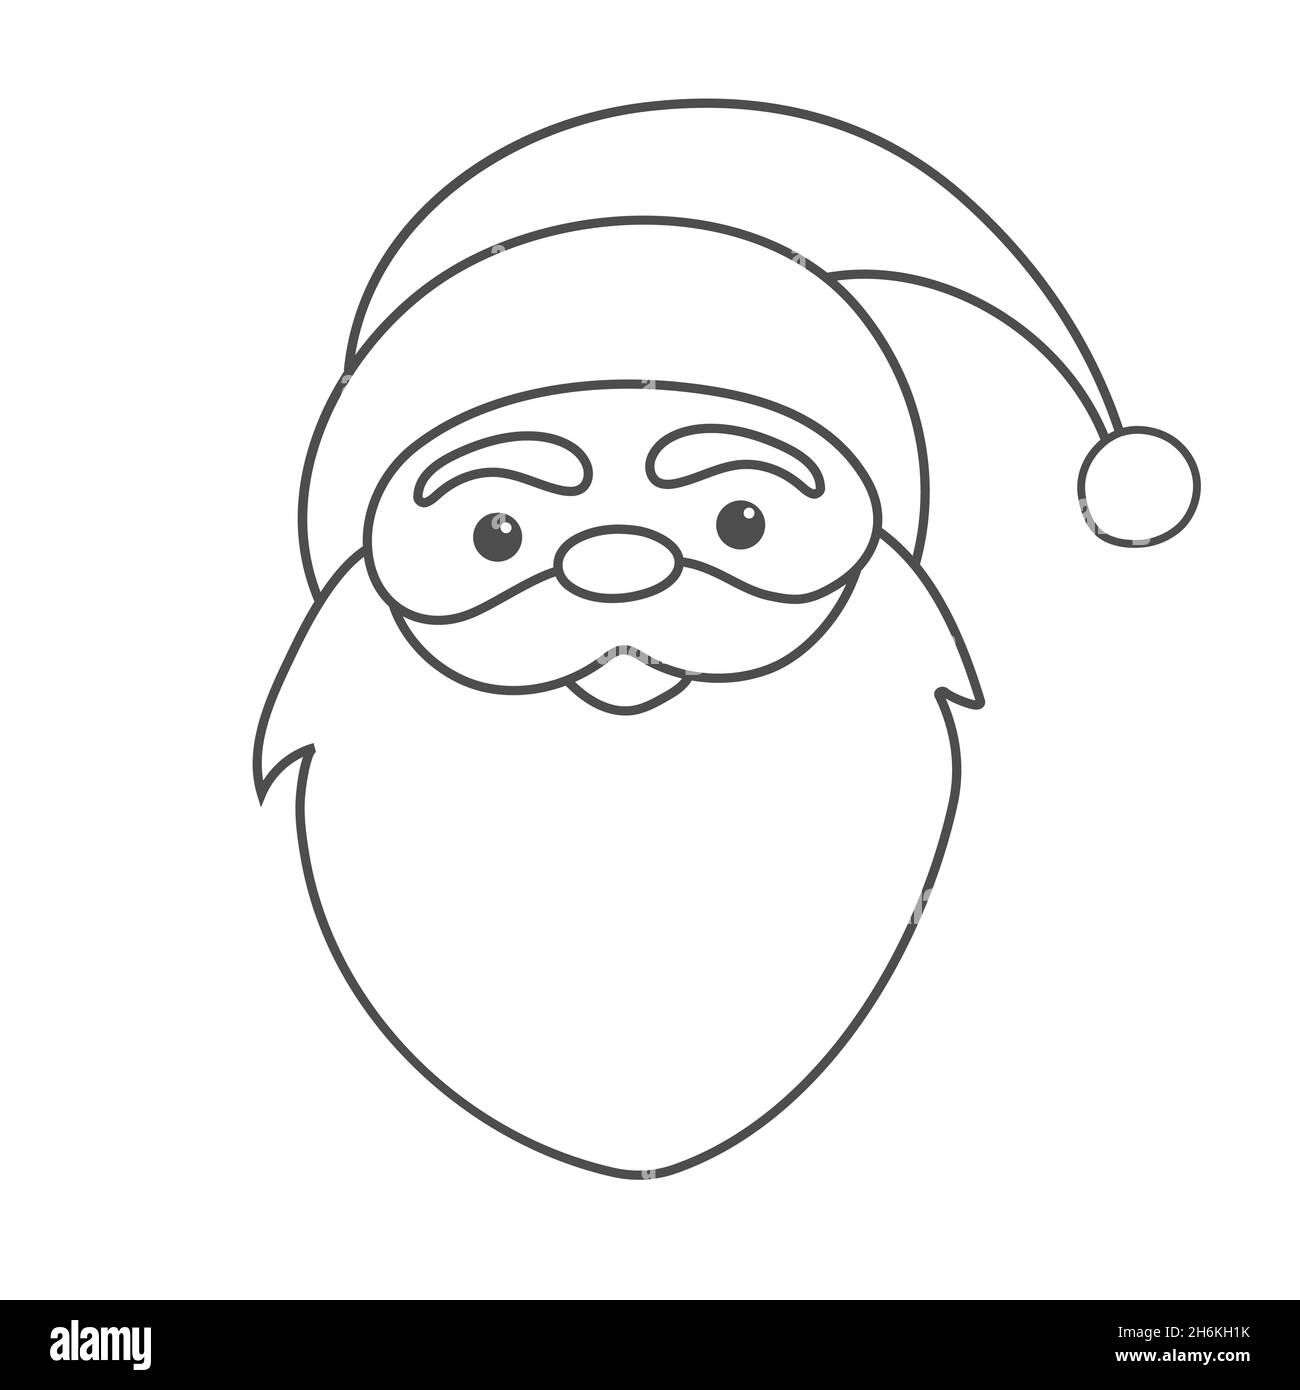 Free Santa Claus Outline Download Free Santa Claus Outline png images  Free ClipArts on Clipart Library